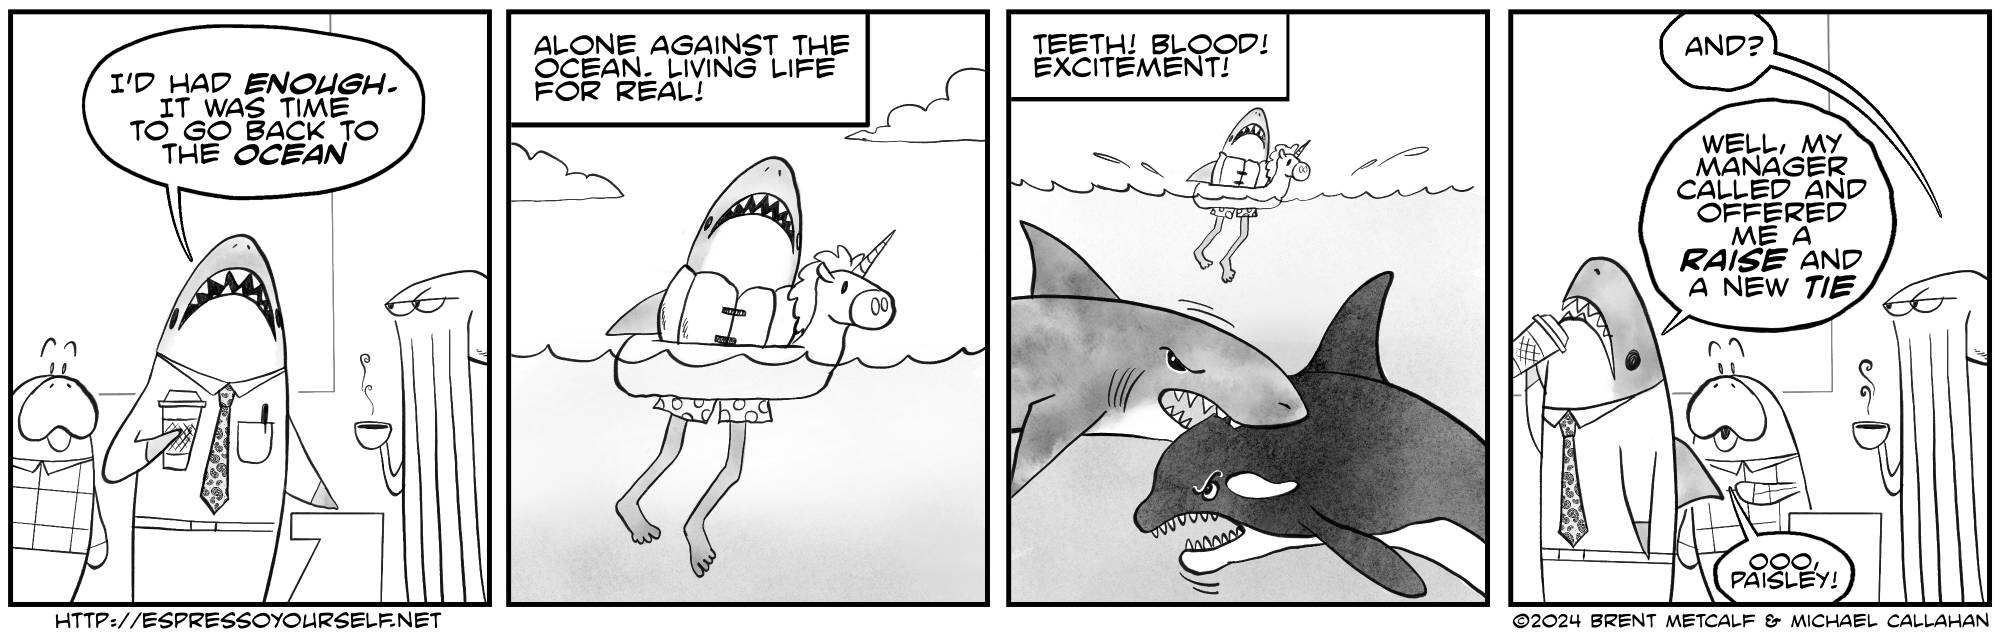 A Tale of Teeth Blood and Ties